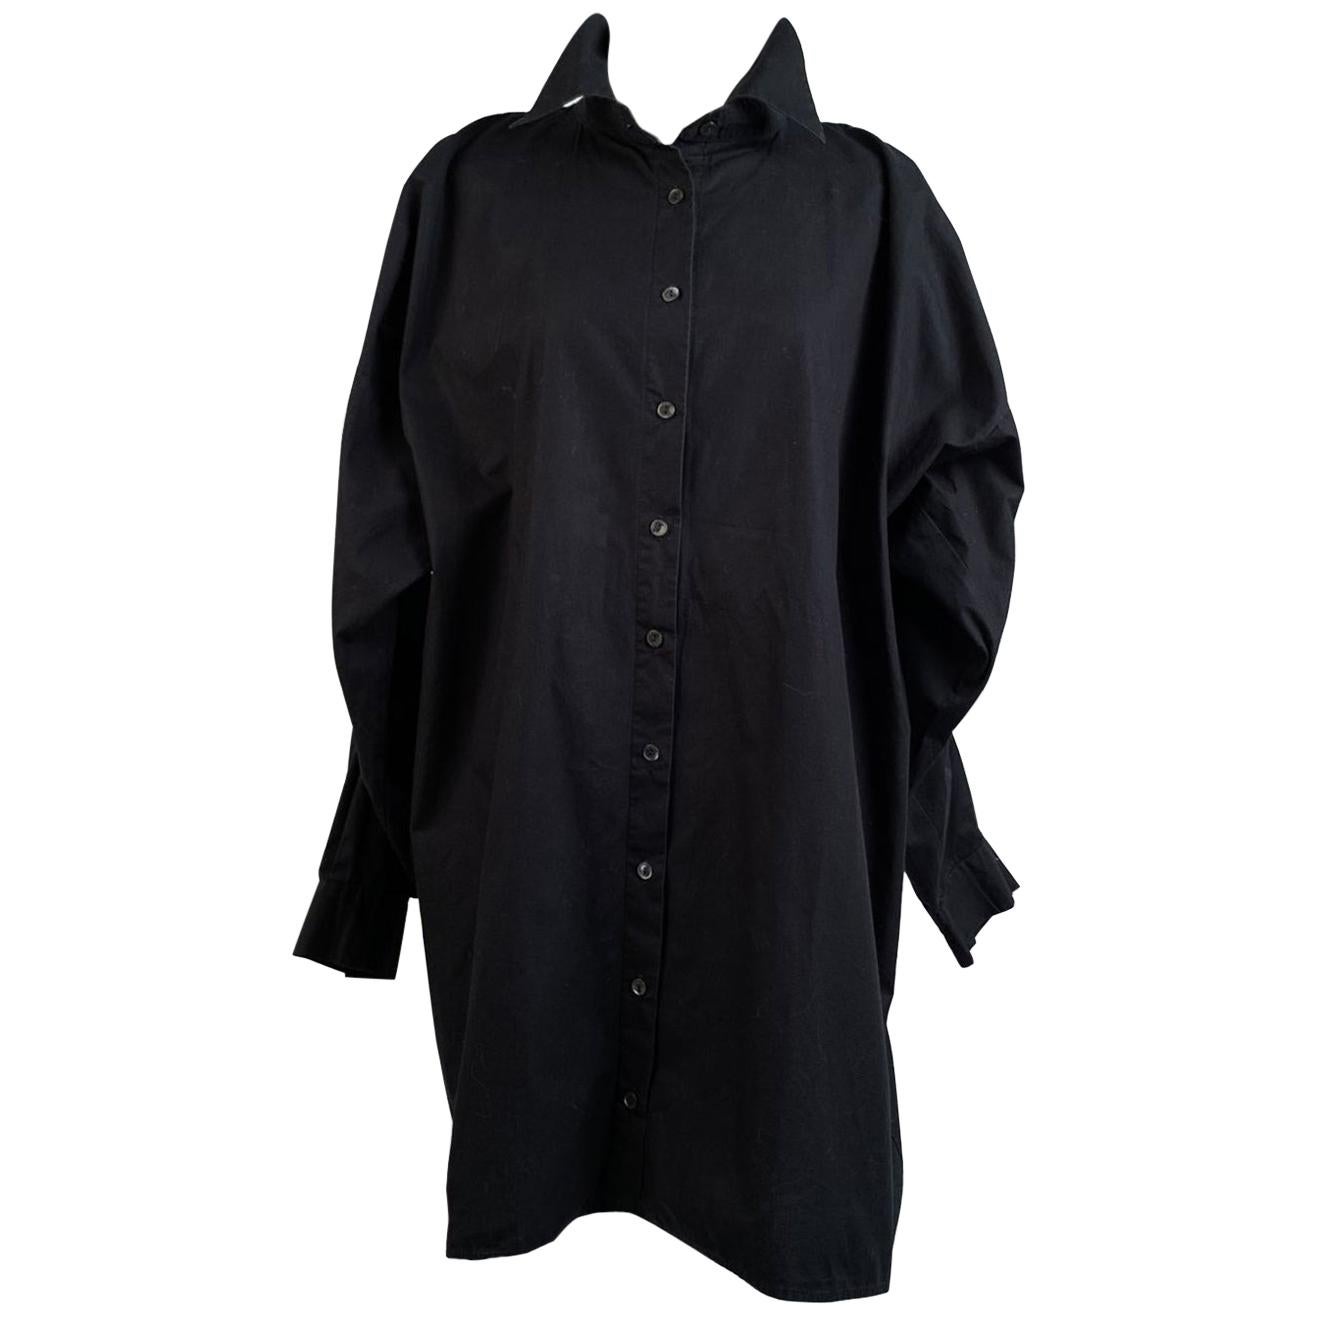 D&G Dolce & Gabbana Black Shirt Dress with Braces Detailing Size 42